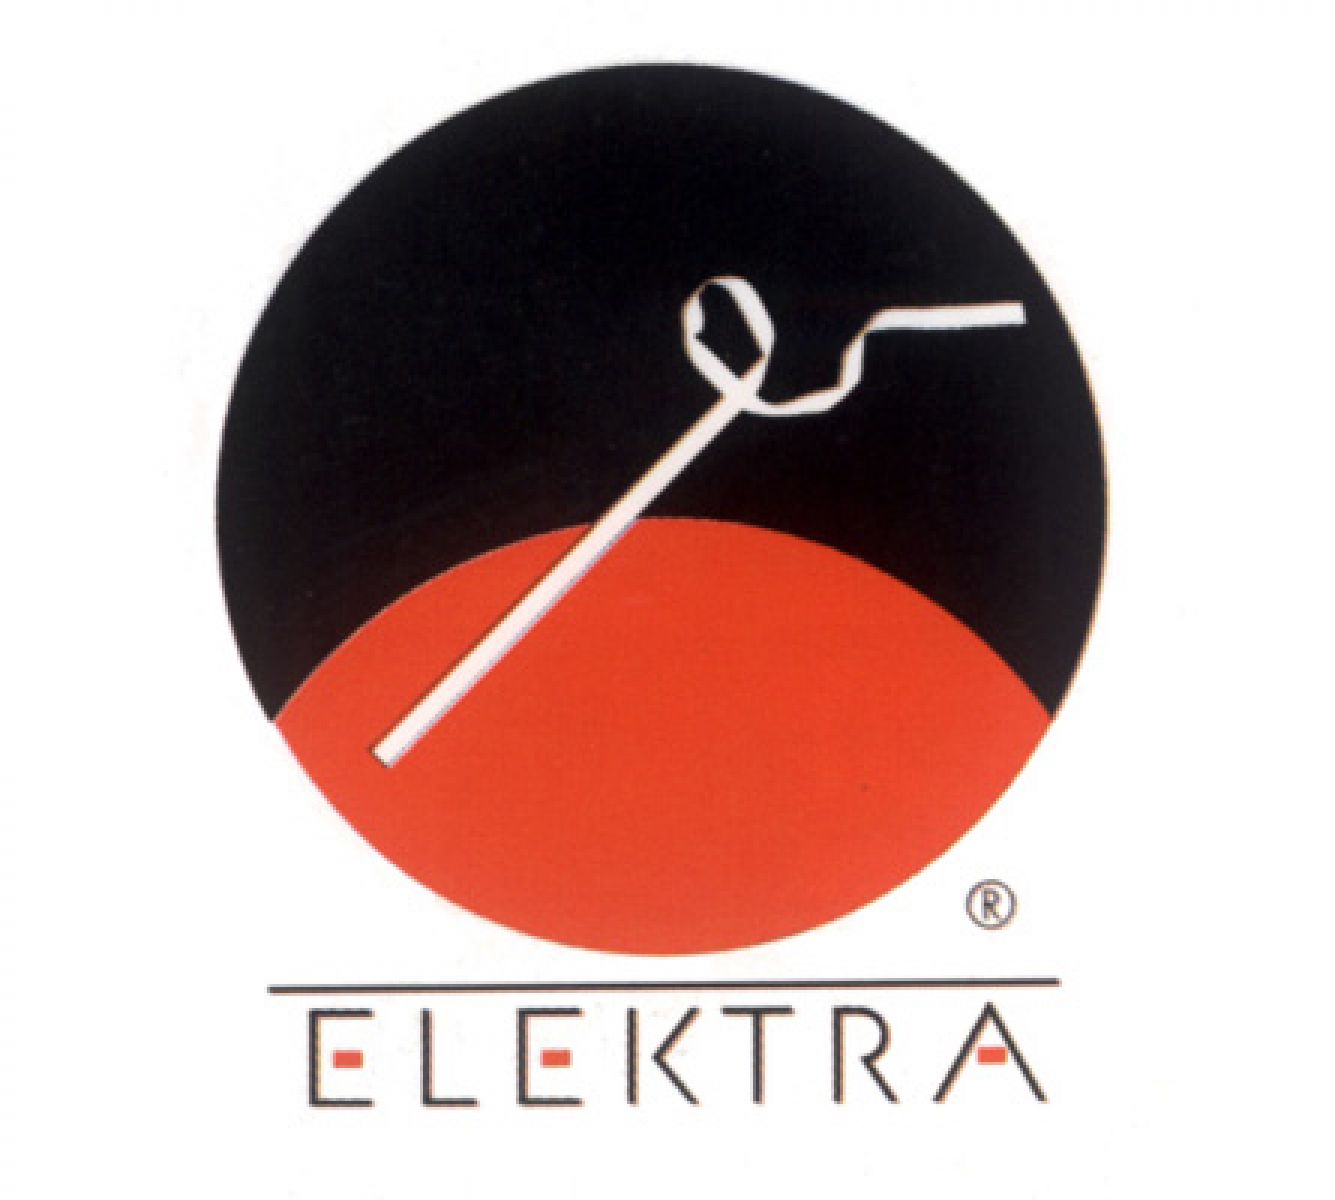 Electra records